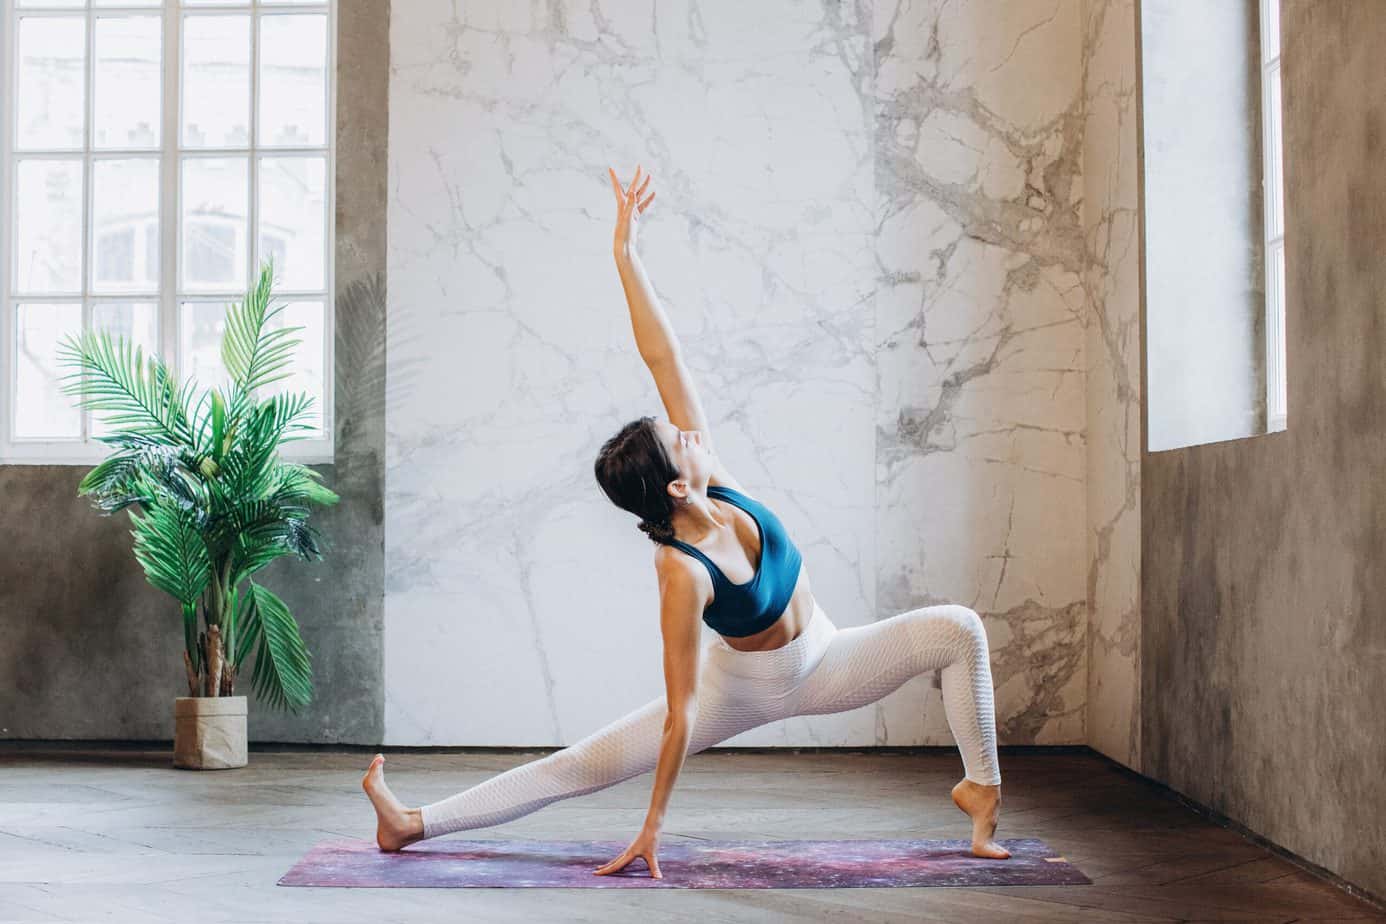 a woman wearing yoga pants stretching on a yoga mat